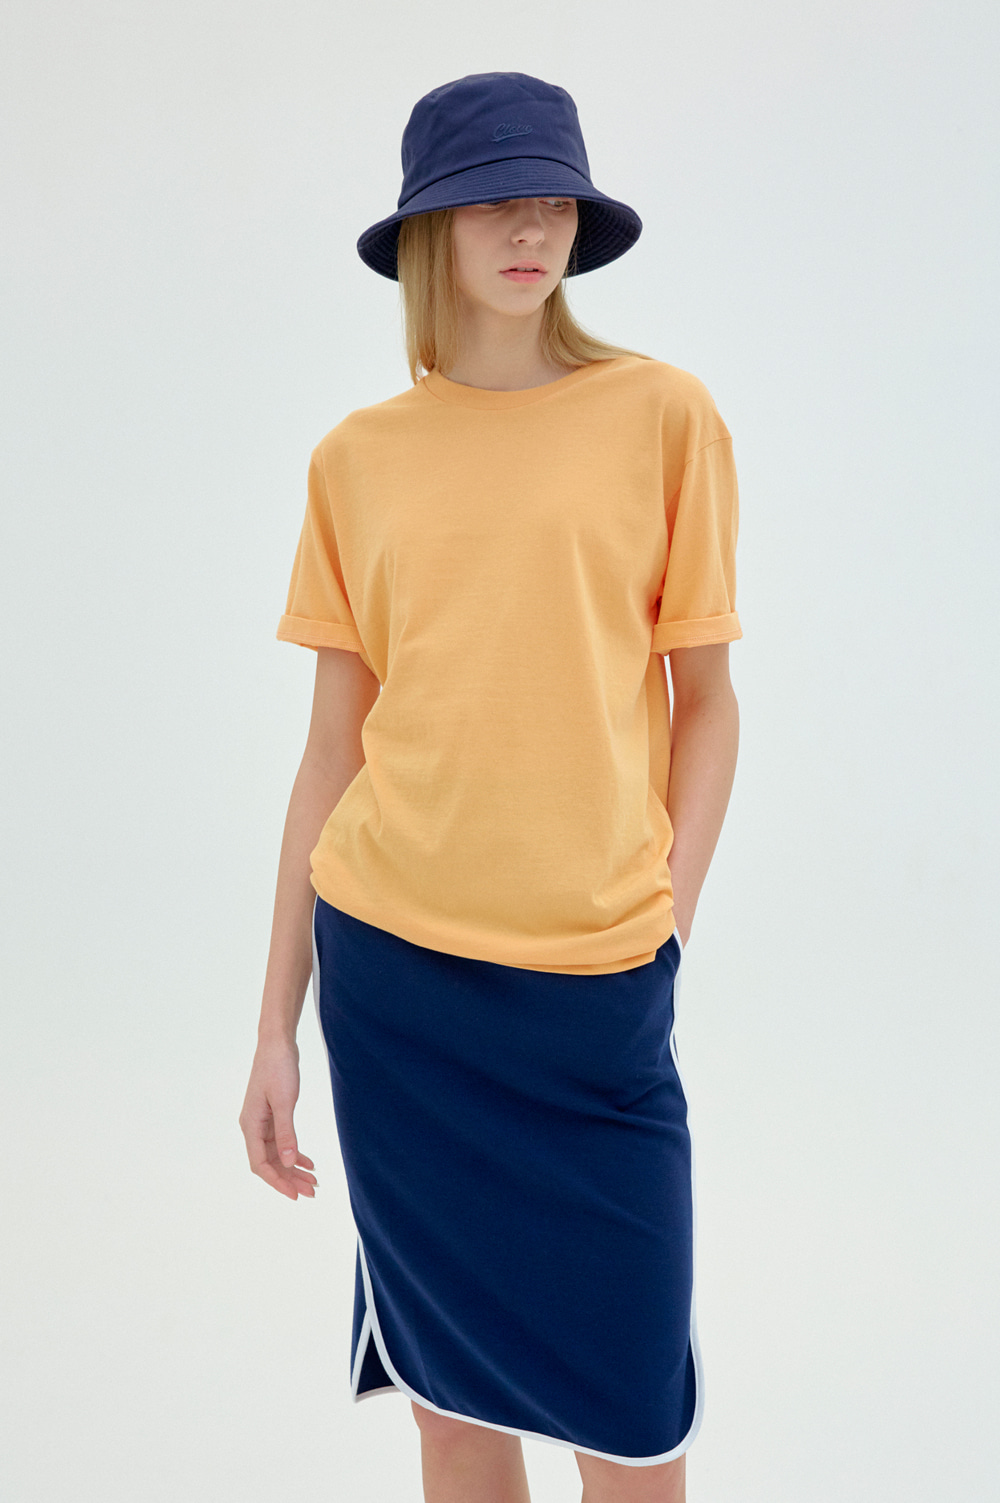 clove - Unisex T-Shirt (Orange)